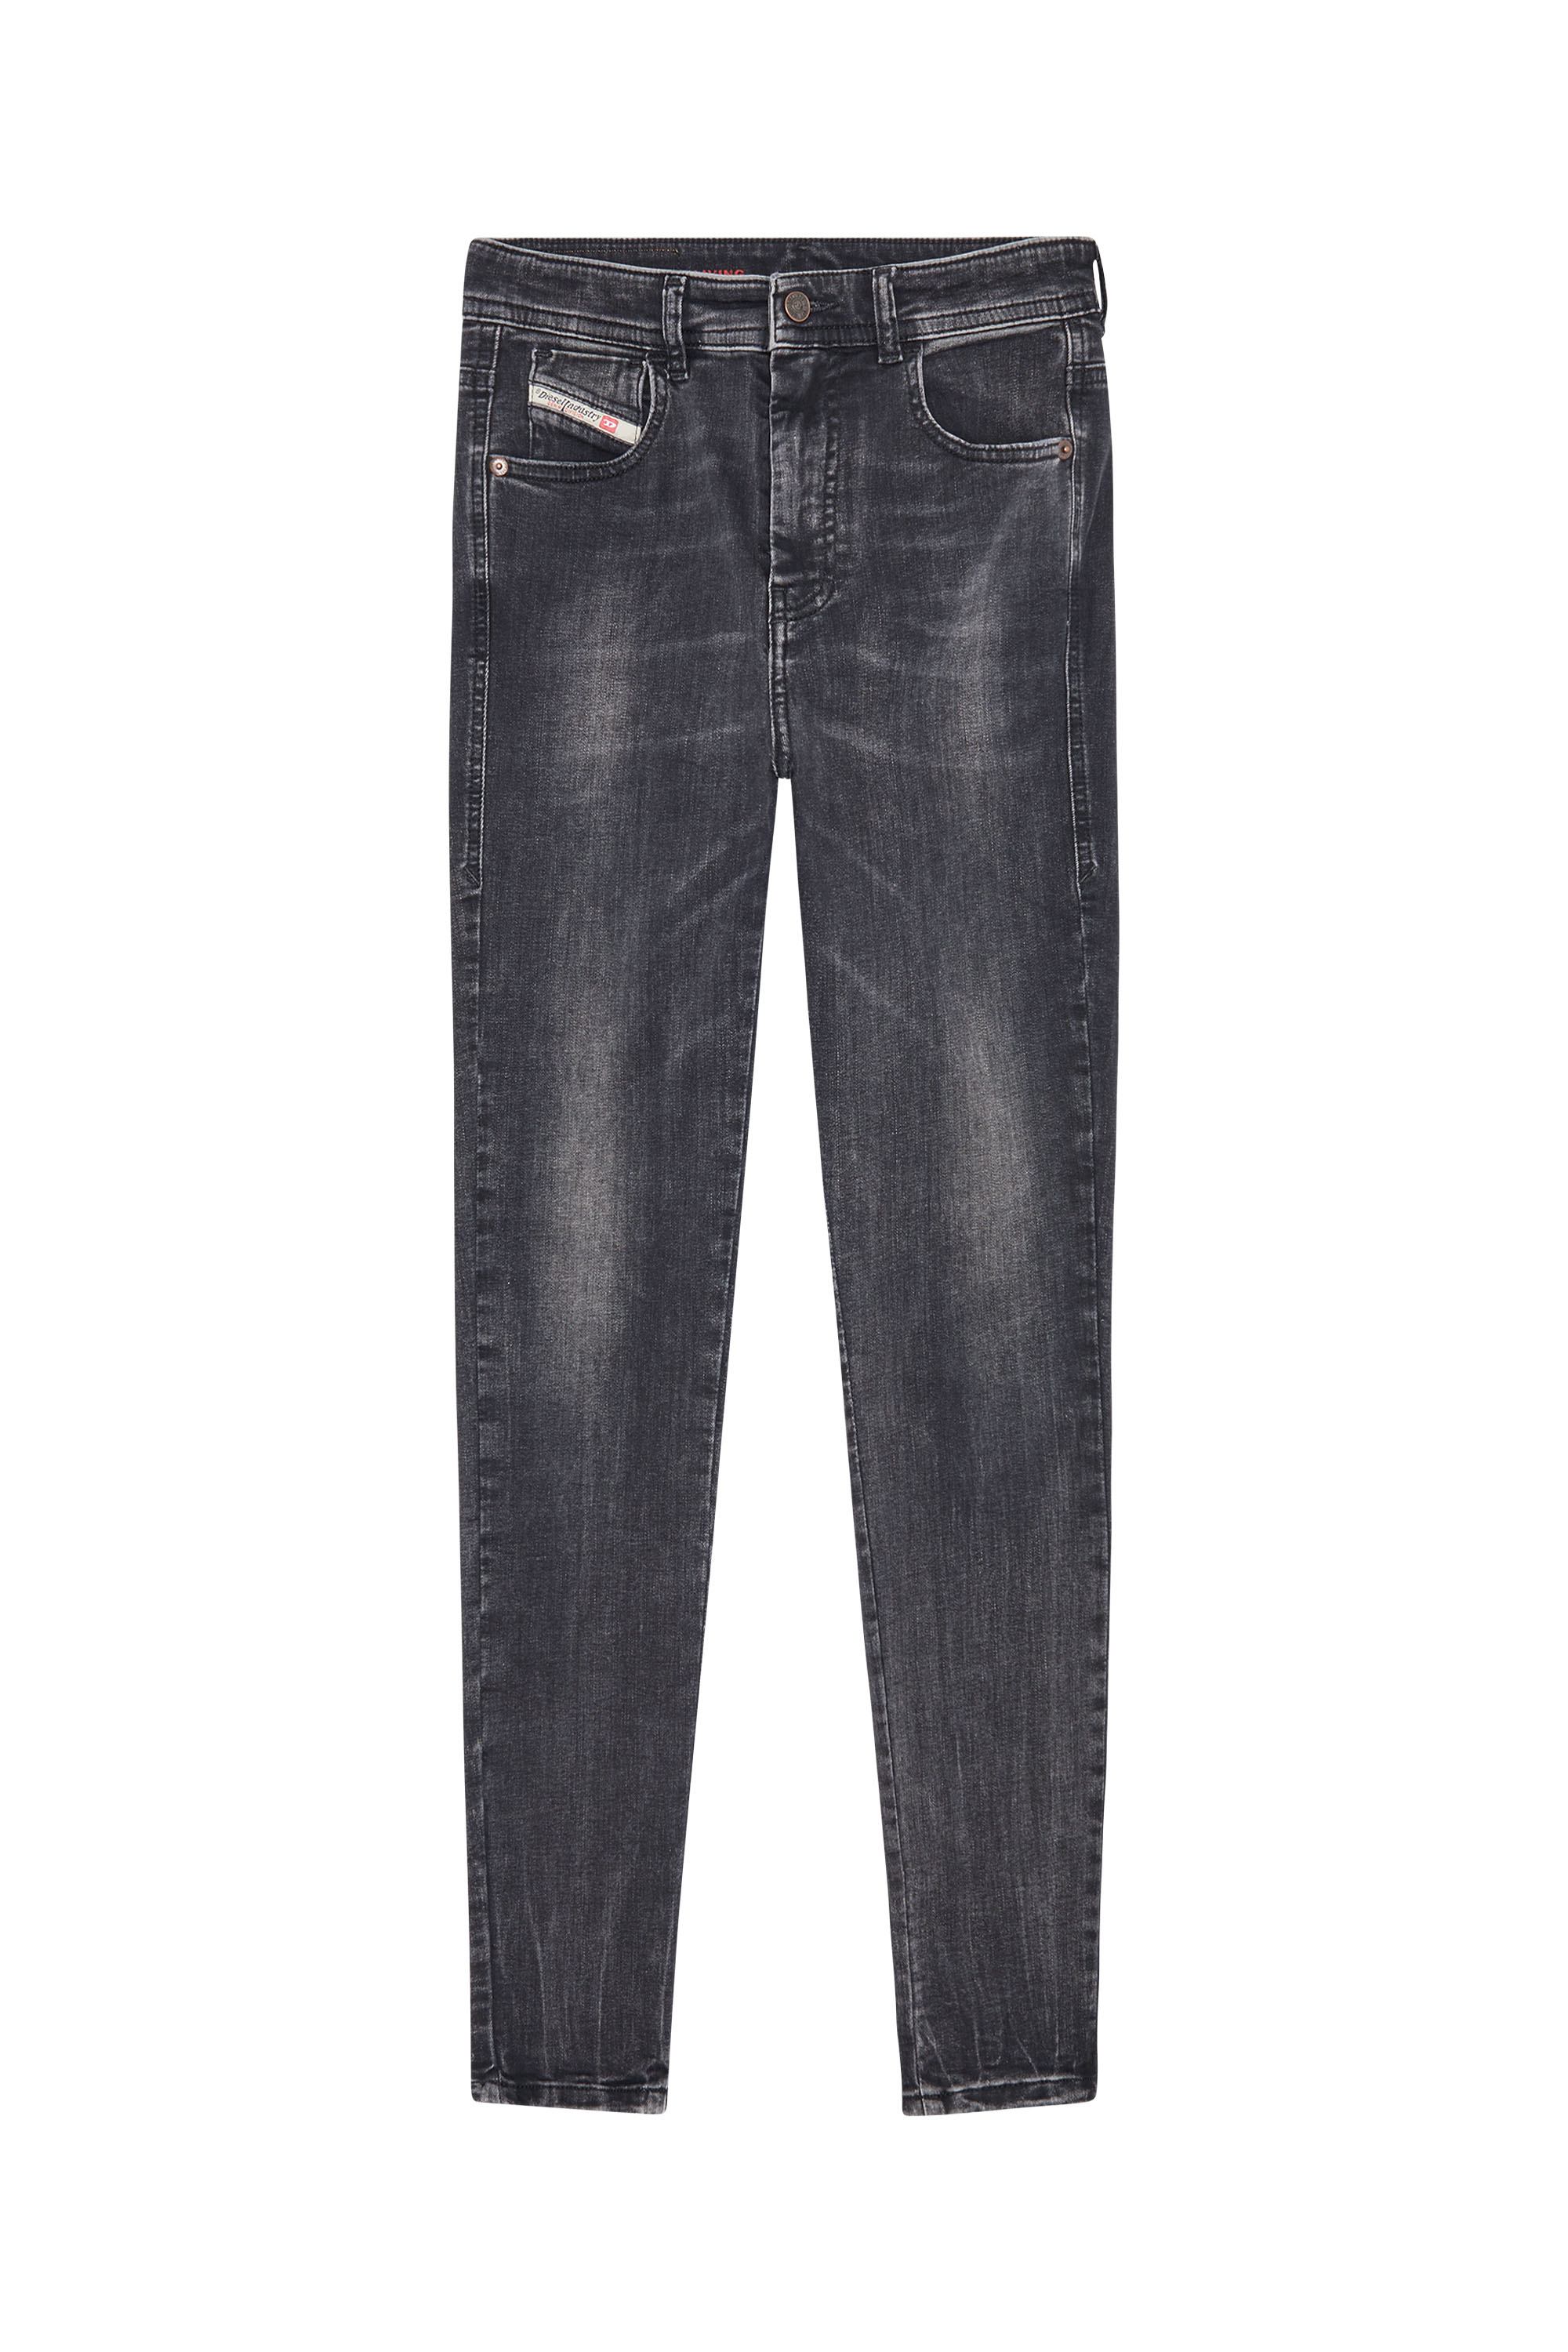 1984 SLANDY-HIGH 09C29 Super skinny Jeans, Schwarz/Dunkelgrau - Jeans